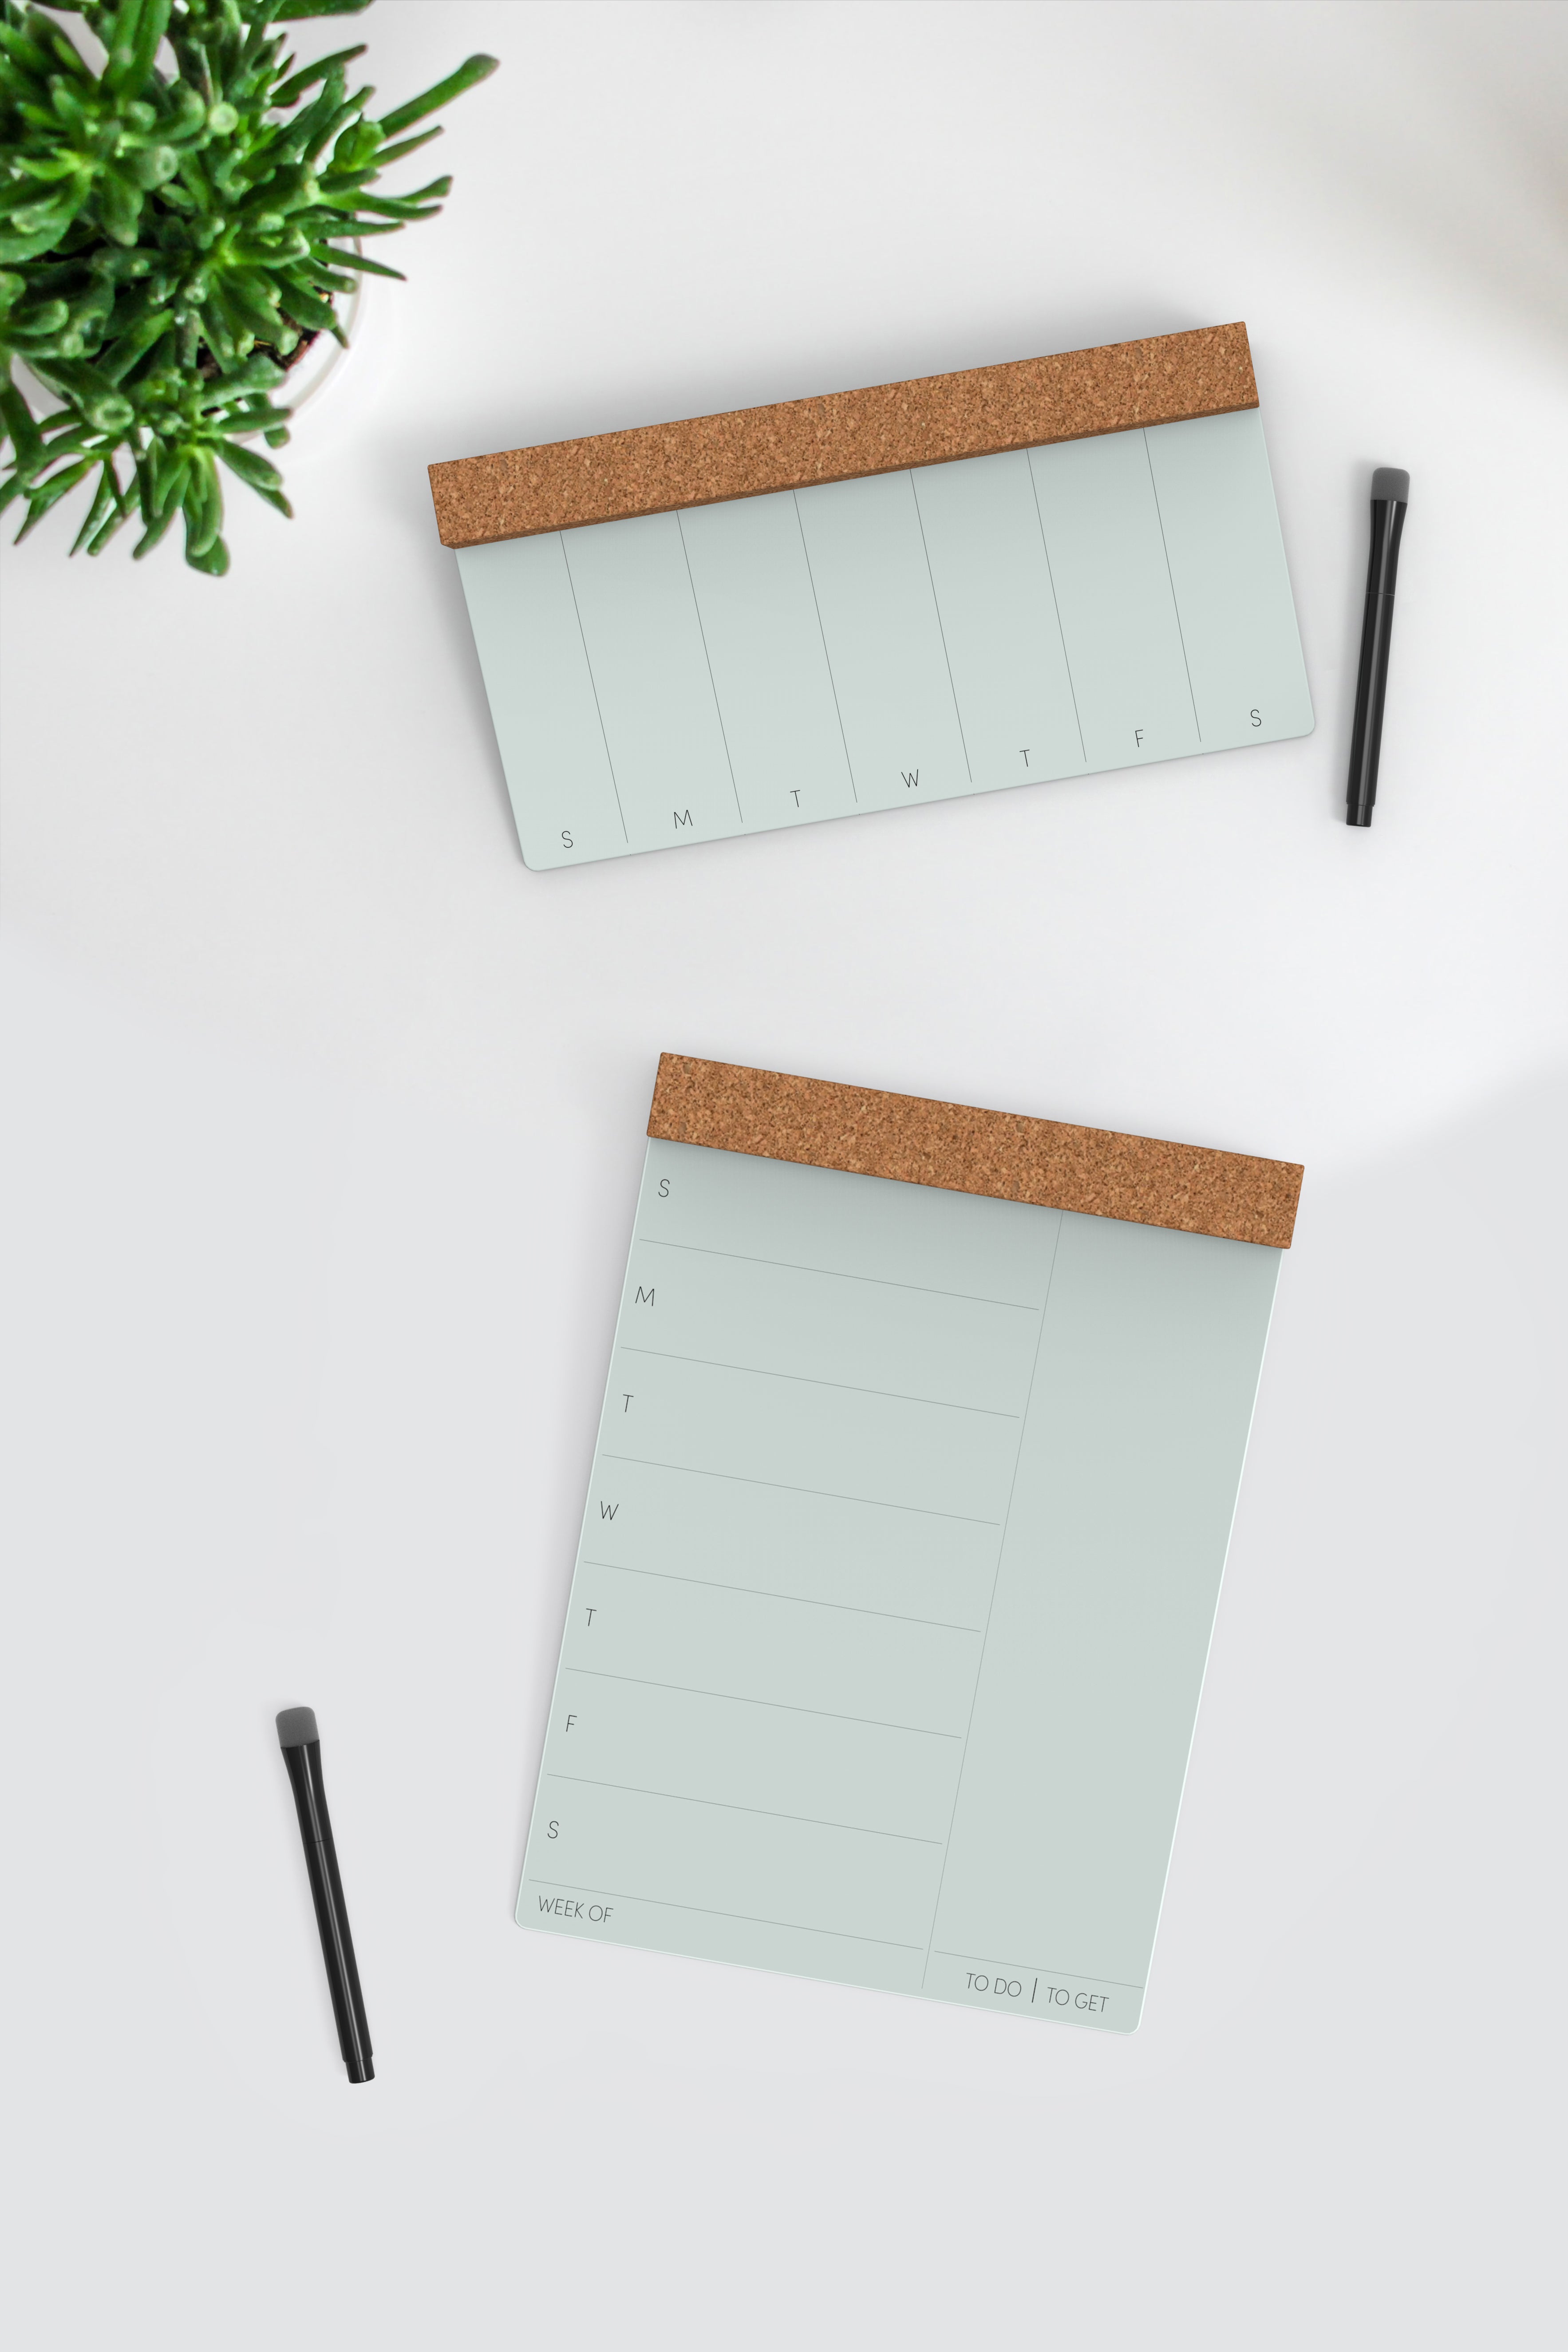 glassencorque large weekly/to-do/to-get desktop dry-erase board